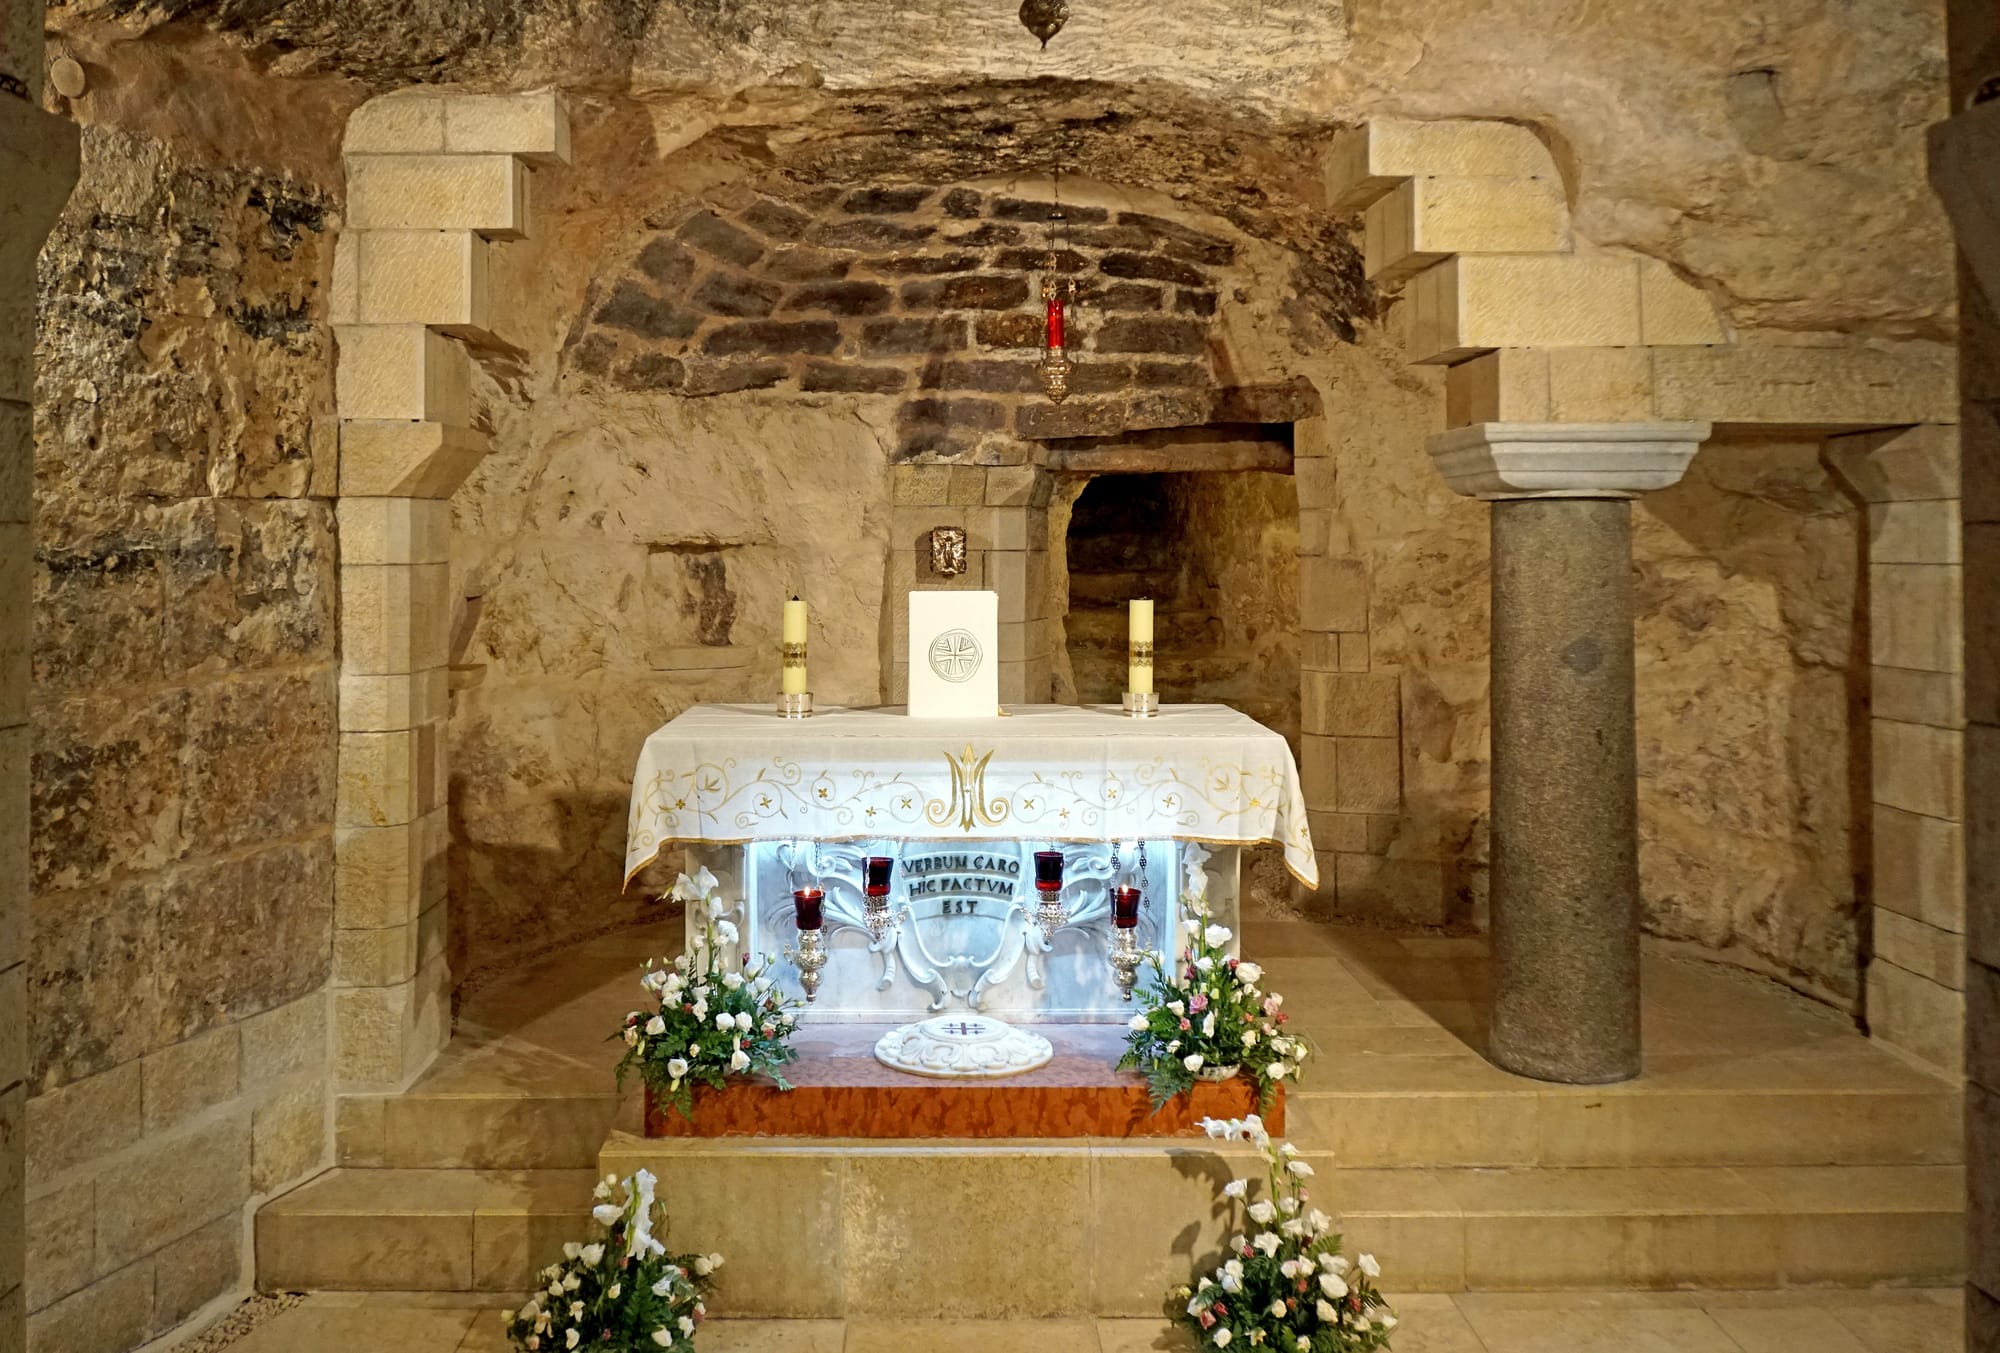  annunciation of the lord, annunciation church, annunciation catholic church, israel news